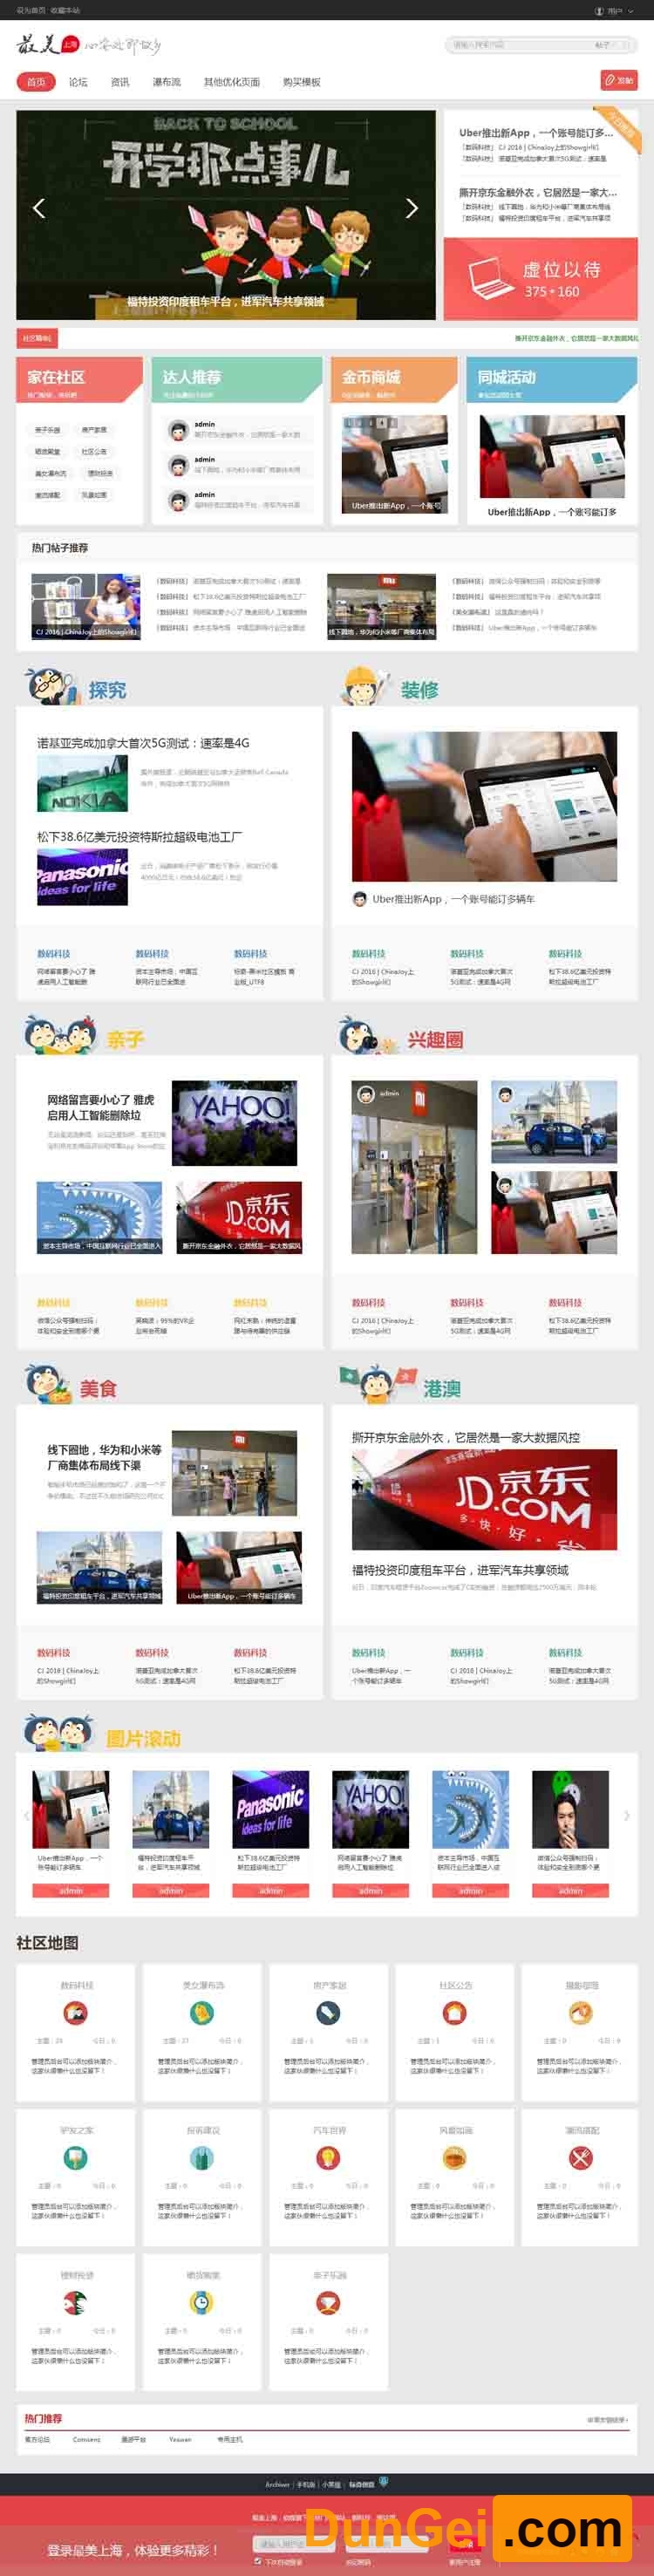 【Discuz模板】最美上海/城市社区商业版生活信息新门户论坛dz模板 GBK+UTF-8两种编码